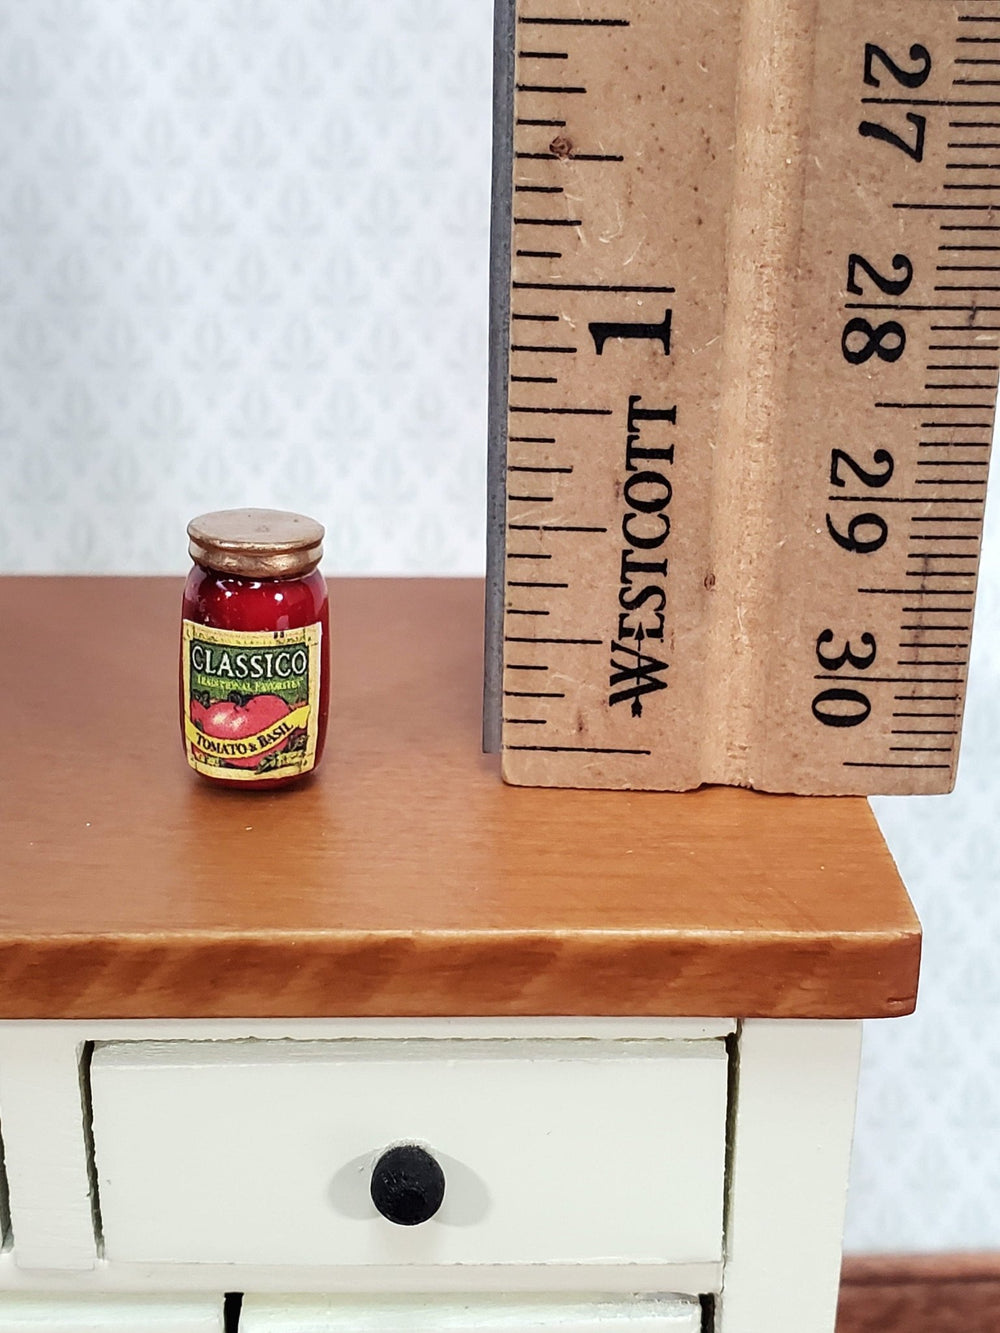 Dollhouse Pasta Sauce Tomato Basil Classico Jar 1:12 Scale Modern Miniature Kitchen Food - Miniature Crush